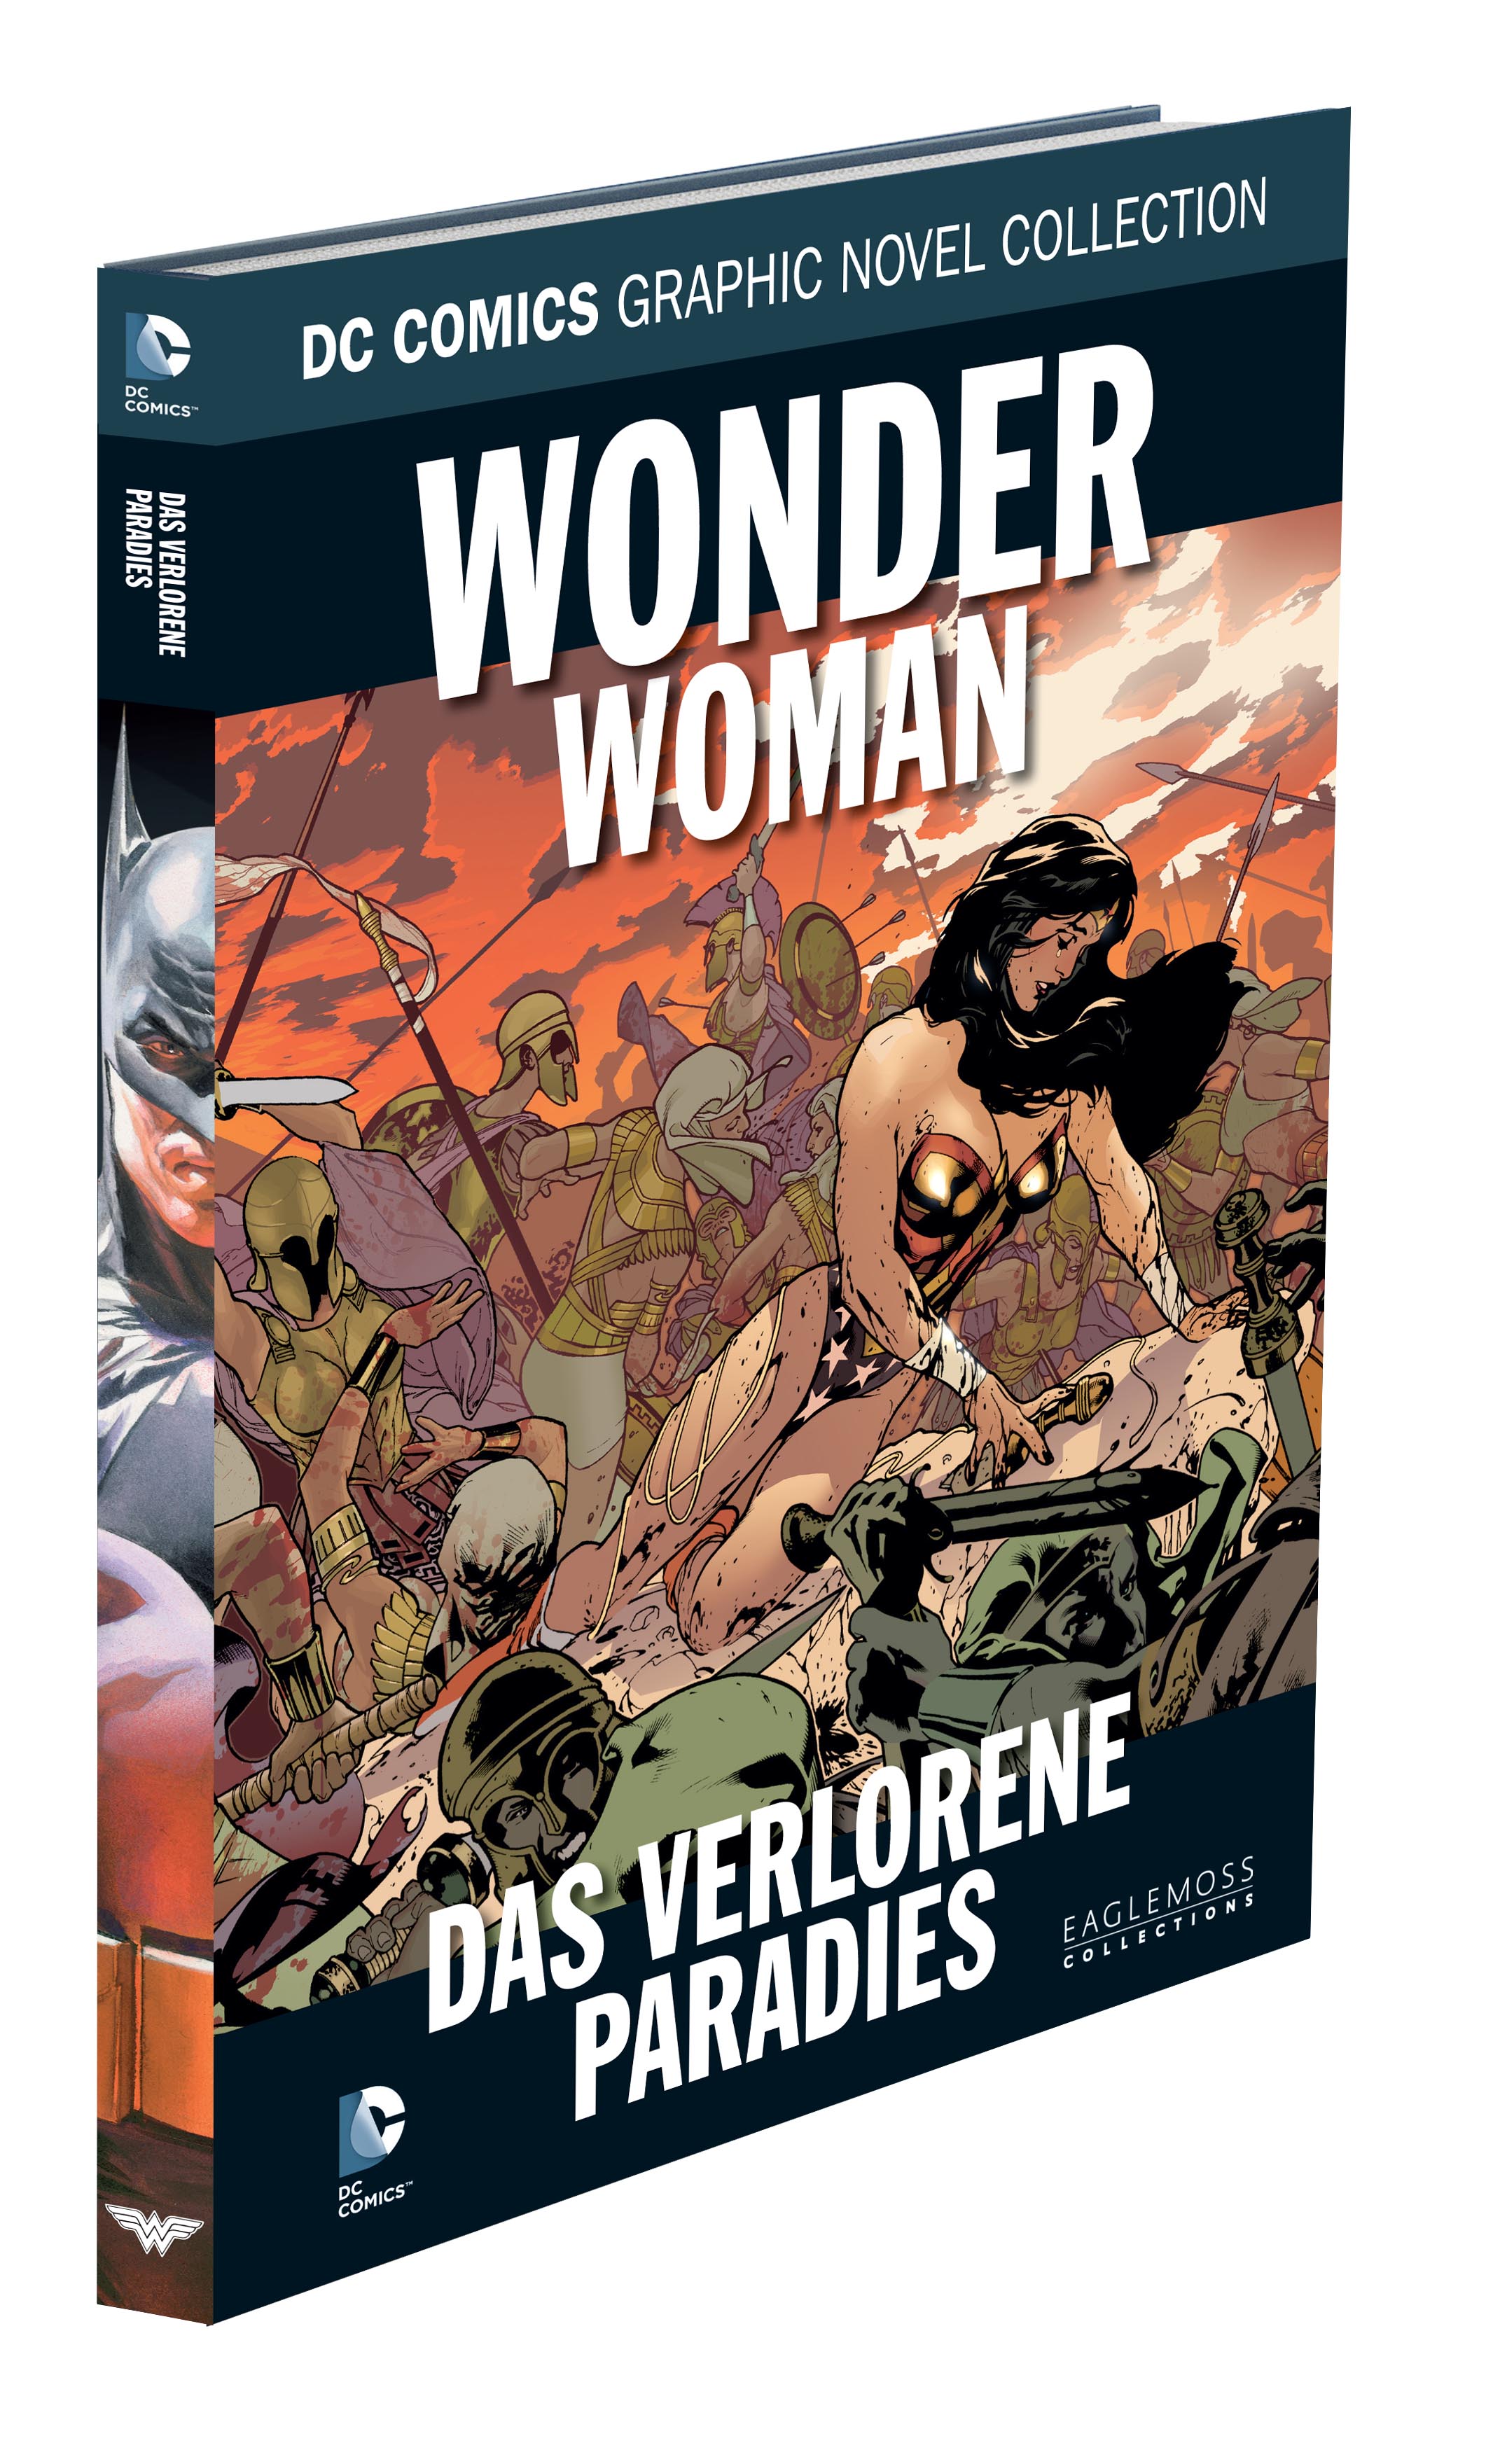 DC Comics Graphic Novel Collection Wonder Woman - Das verlorene Paradies